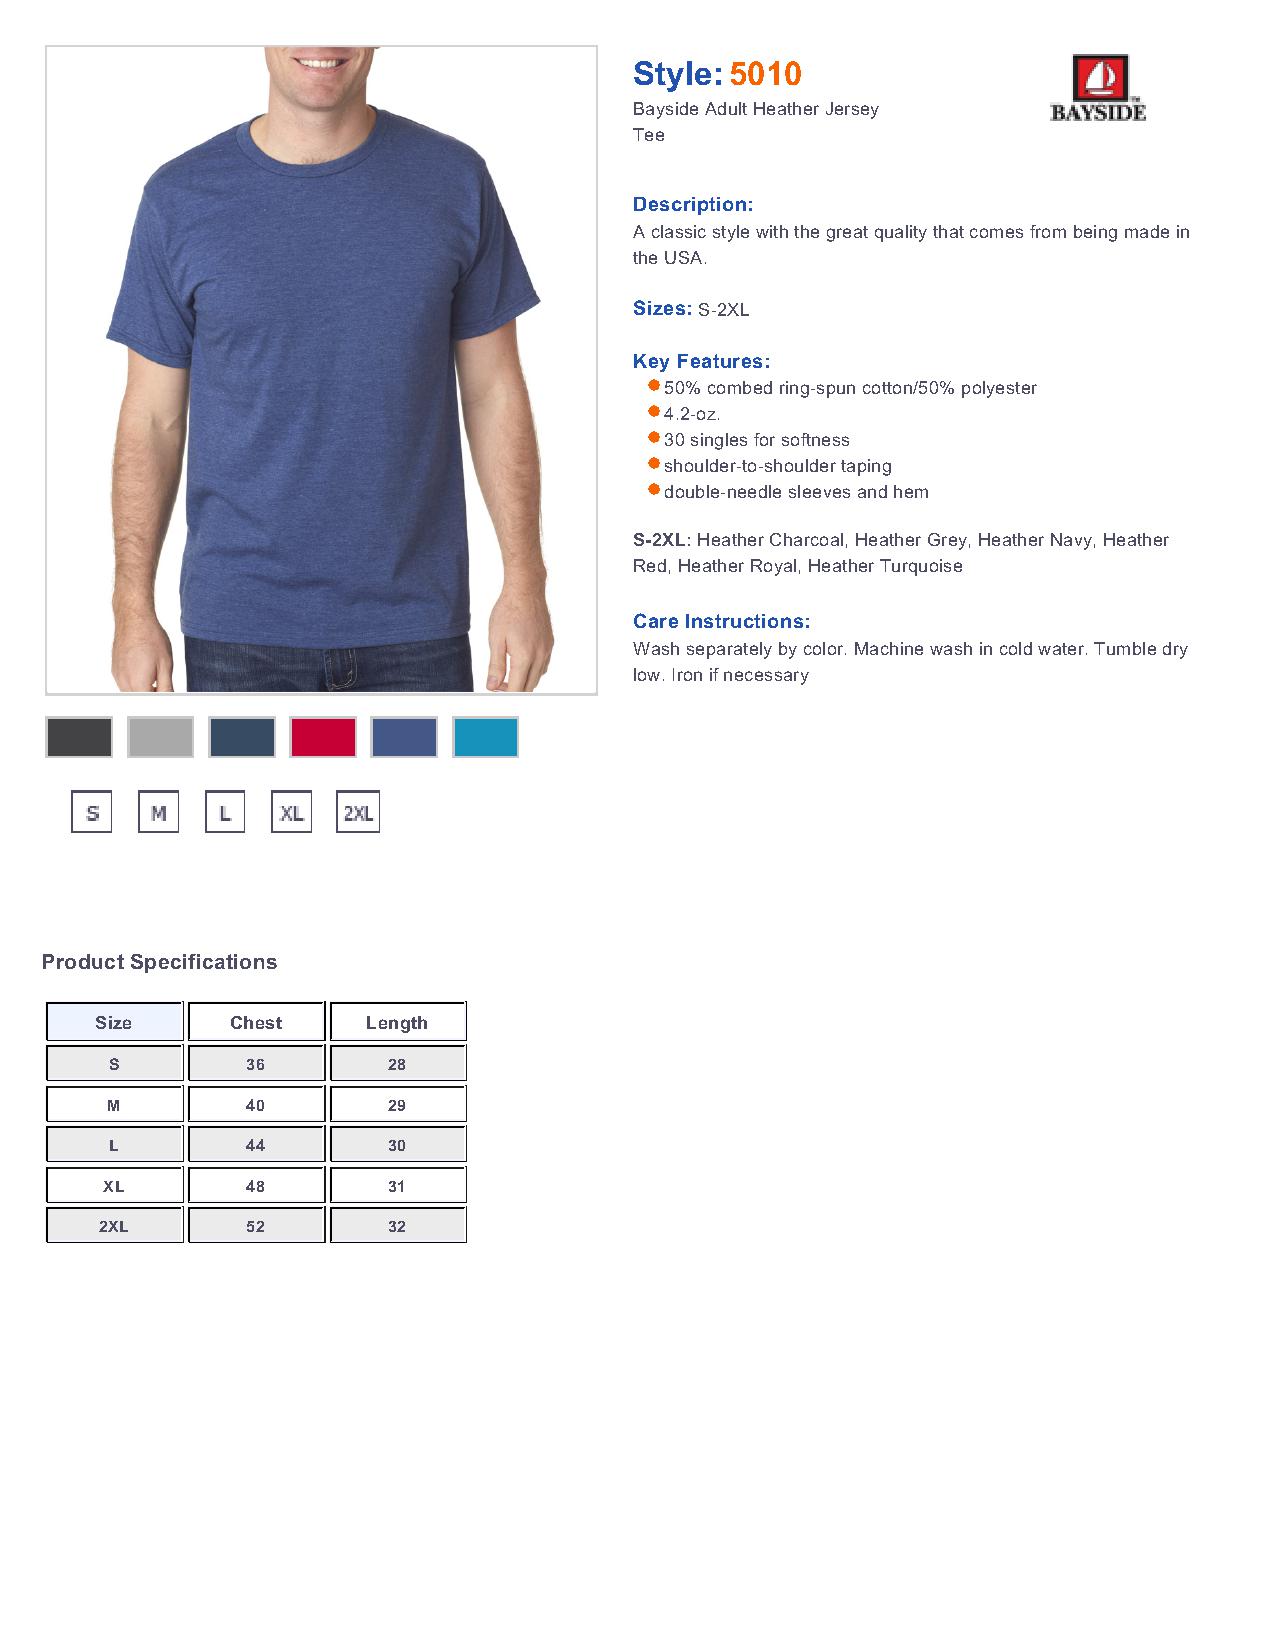 Bayside 5010 - Adult Heather Jersey Tee $9.74 - T-Shirts